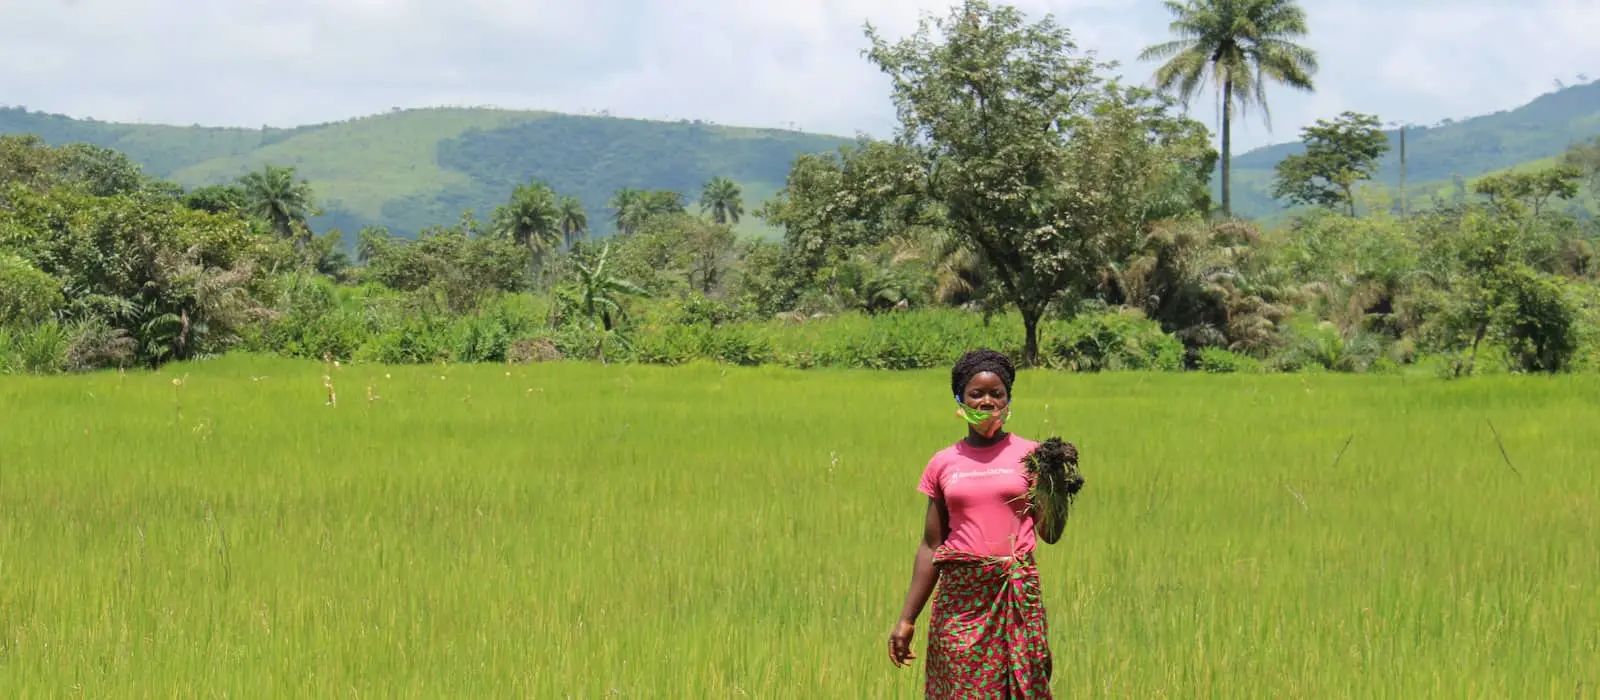 Member of the Womenís VSLA Group on their IVS rice fields in Nikikoroh, Sambaya Chiefdom, Tonkolili District.